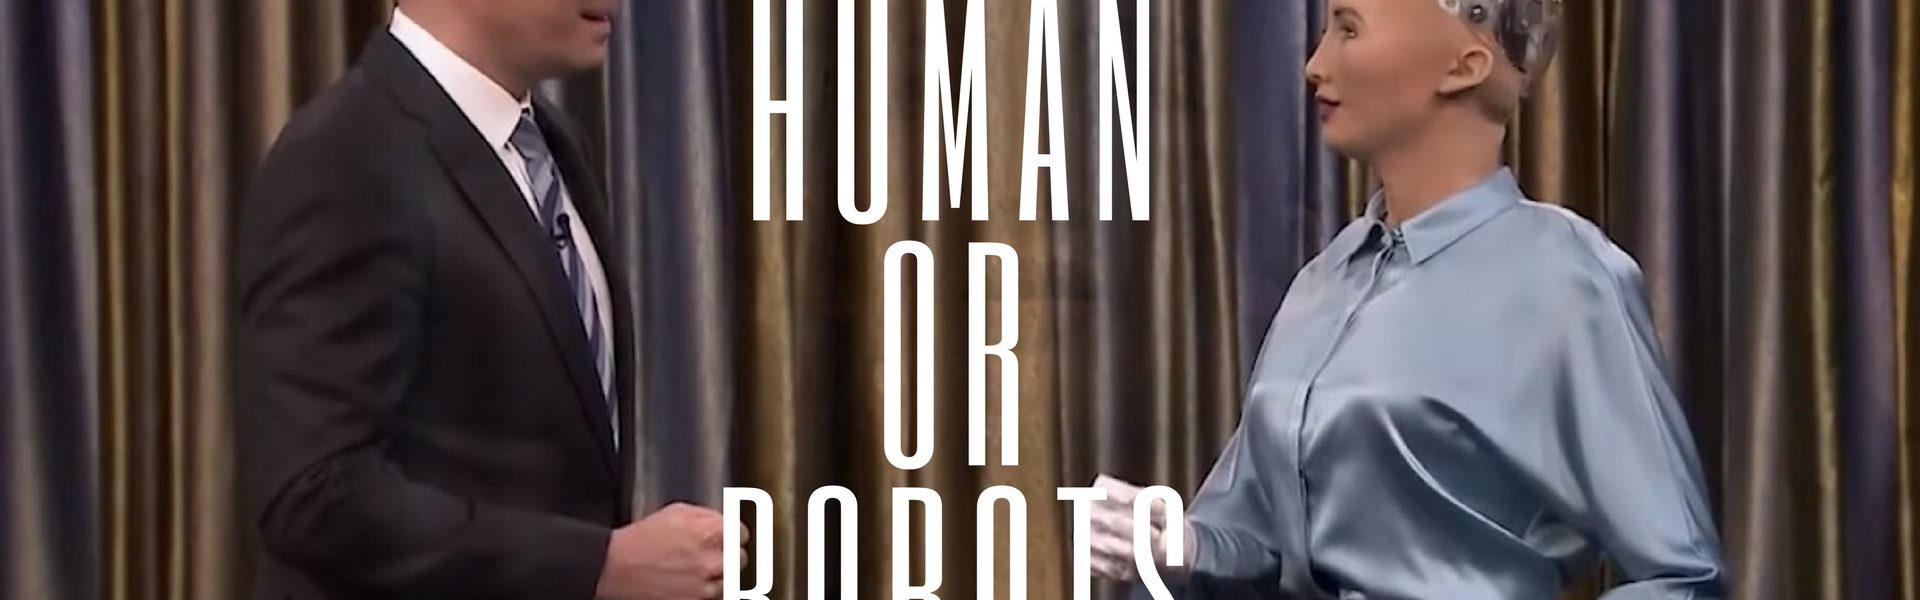 HUMAN VS AI TEACHNOLOGY